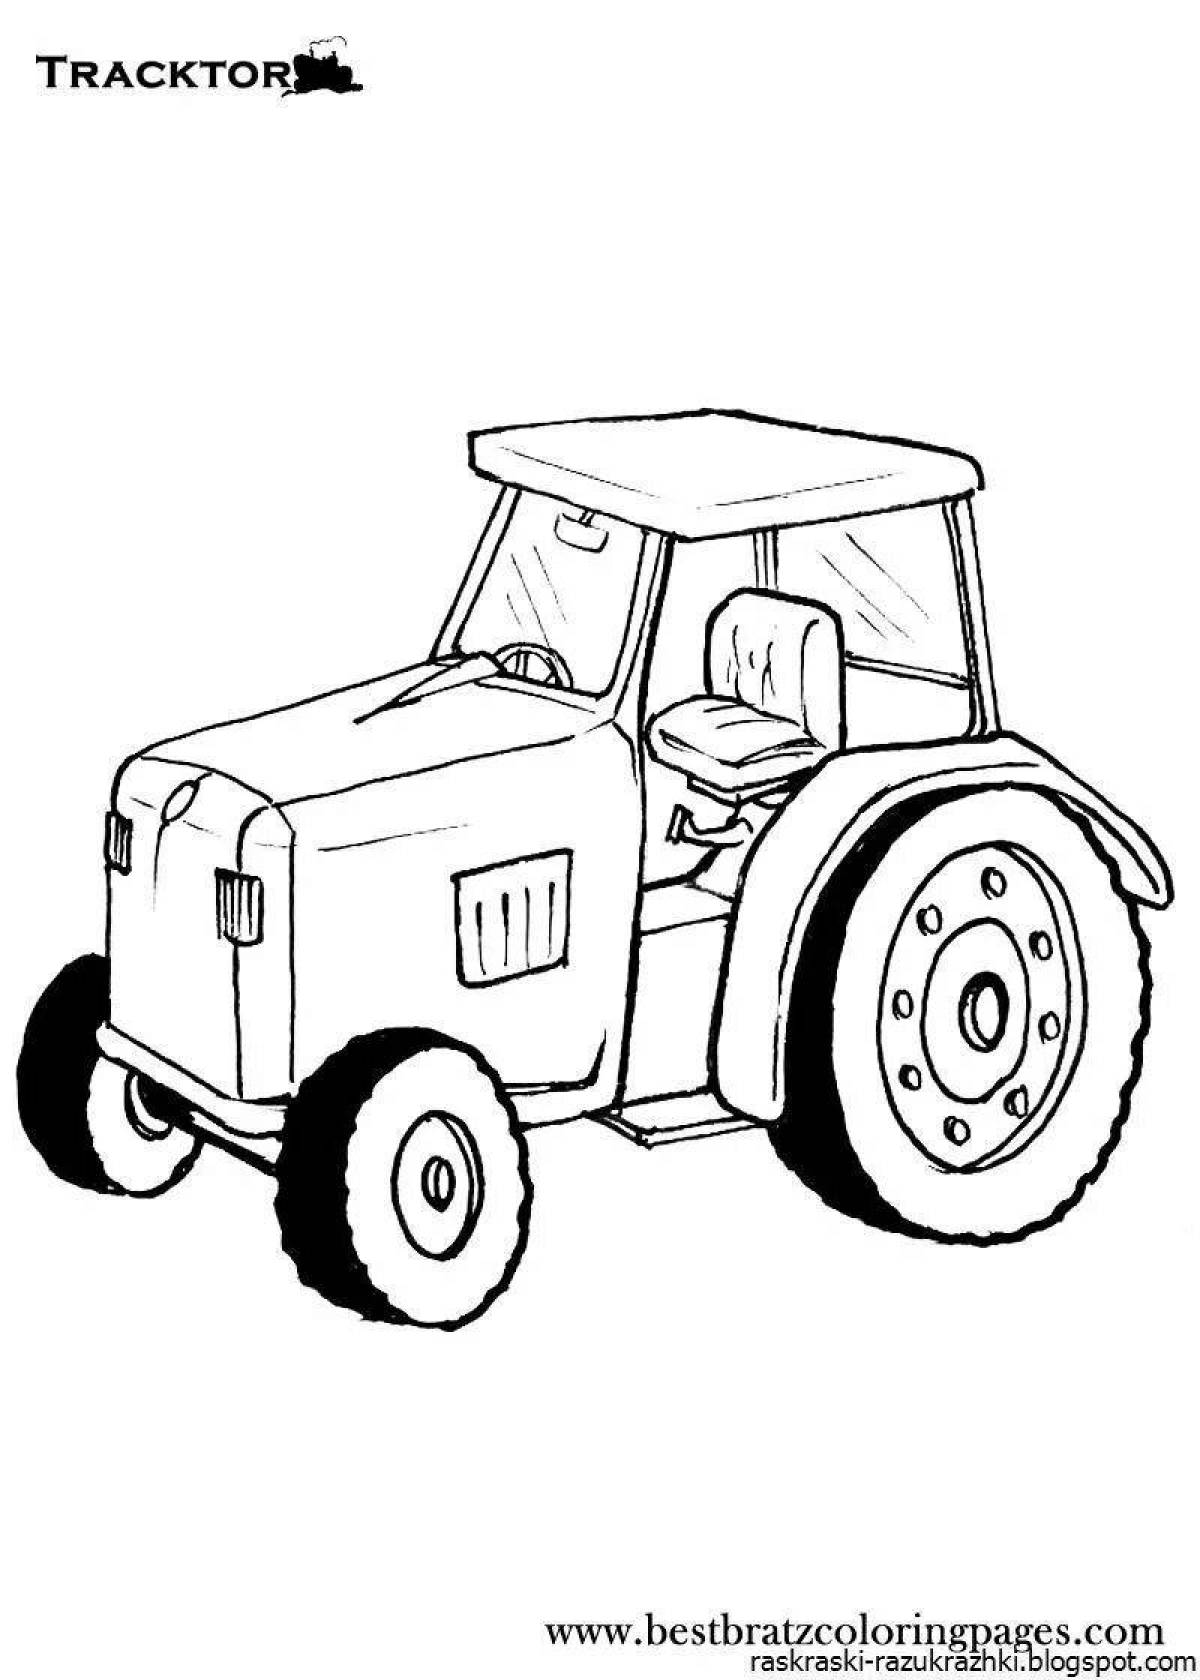 Незабываемая страница раскраски трактора